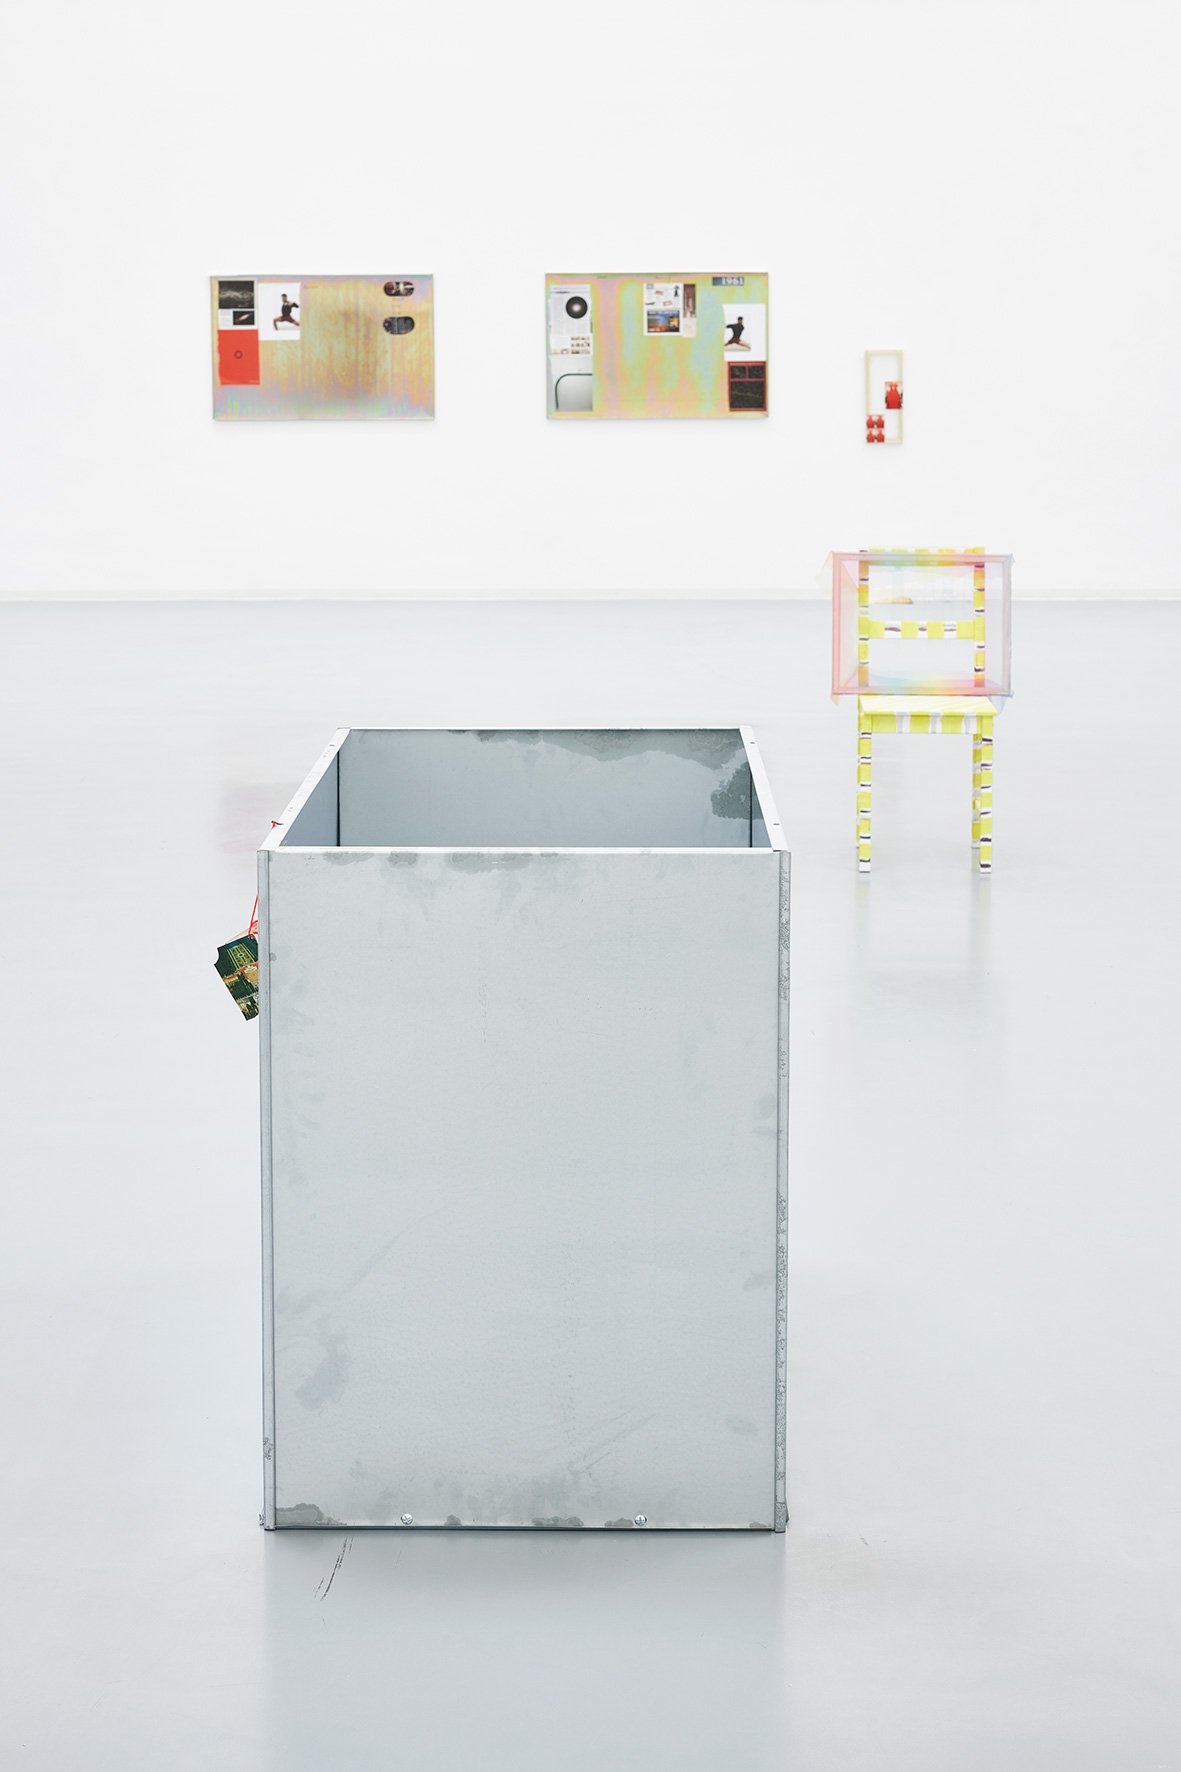 Hayley Tomkins, Stick crystals to paintings, installation view, Bonner Kunstverein, 2018. Photo: Mareike Tocha